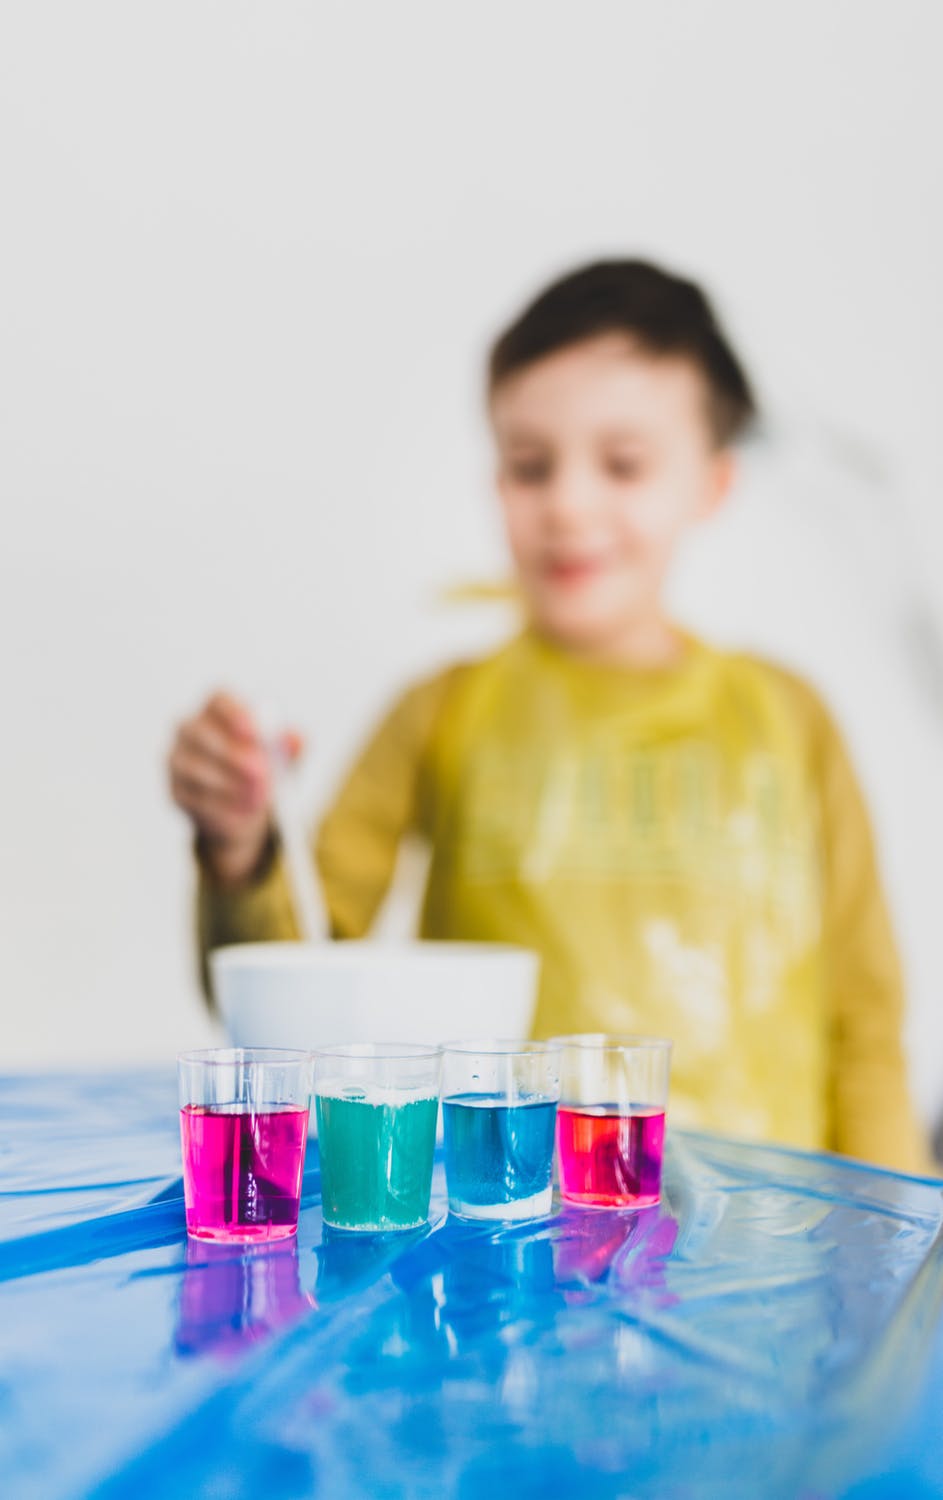 A-kid-preparing-colorful-liquids